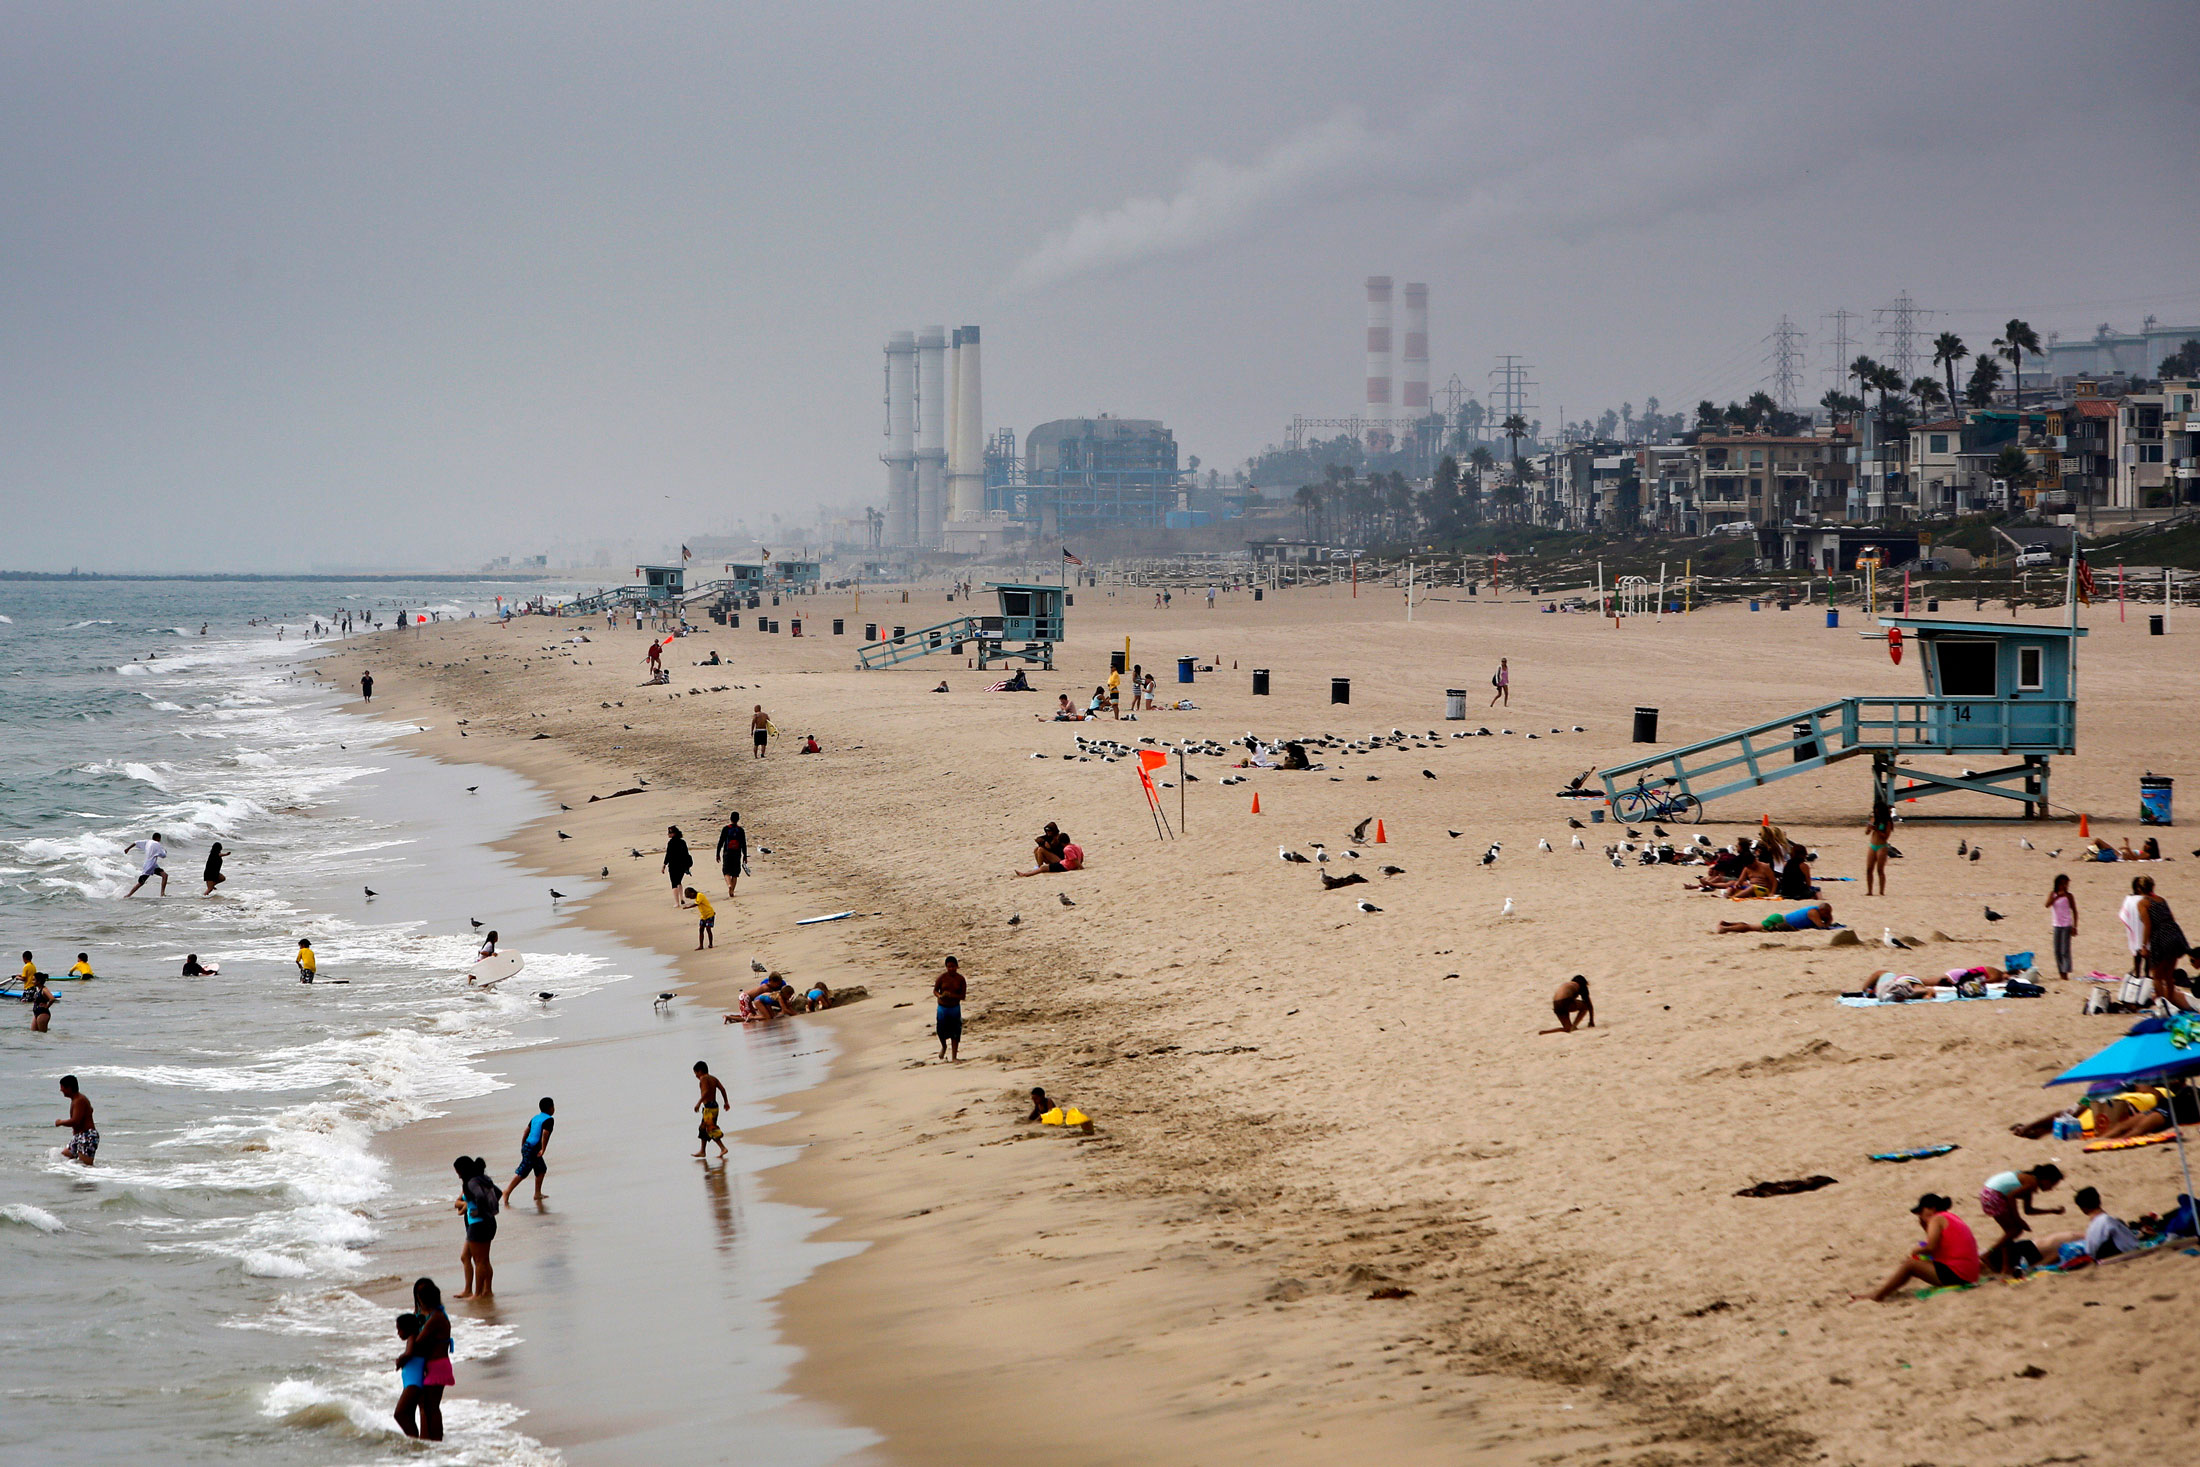 Manhattan Beach, Calif., with Chevron’s El Segundo refinery in the background.
